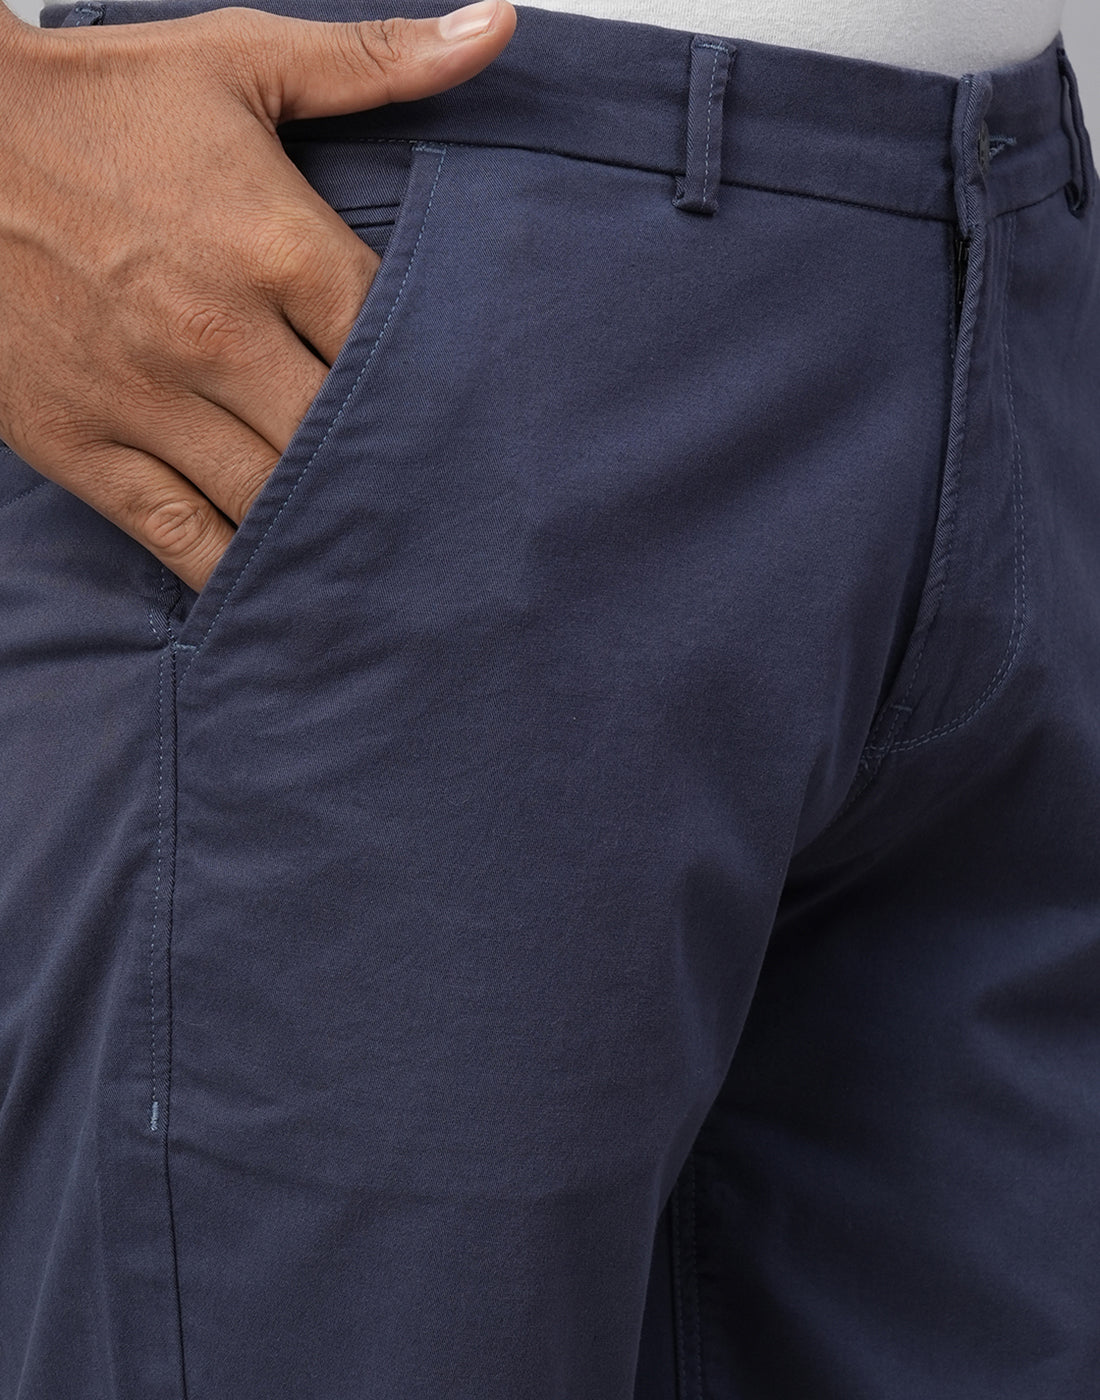 Genips Men'S Dark Blue Cotton Lycra Slim Fit Shorts